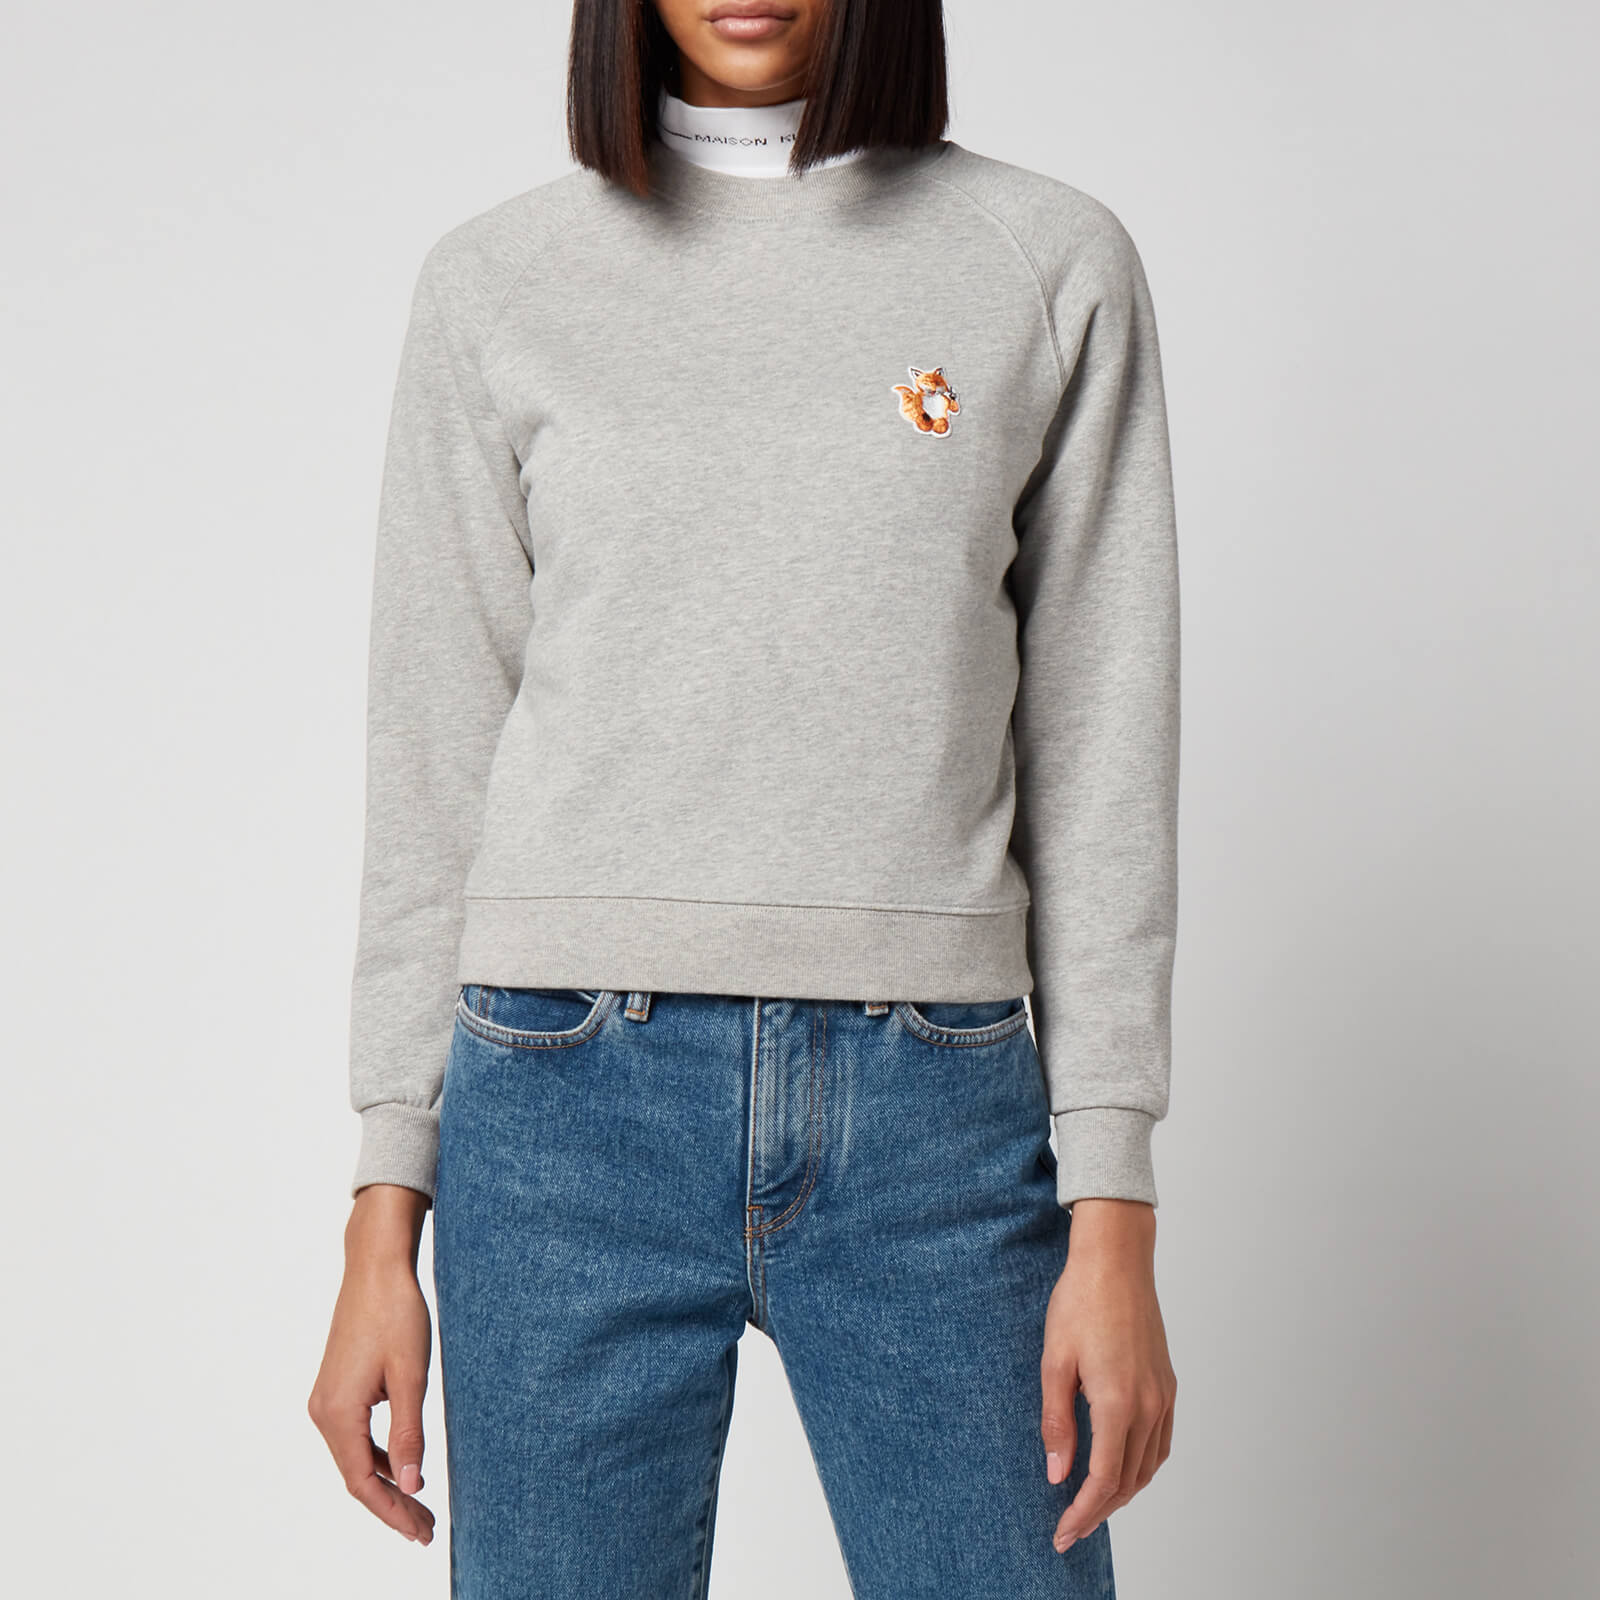 Maison Kitsun Women's All Right Fox Patch Vintage Sweatshirt - Grey Melange - XS